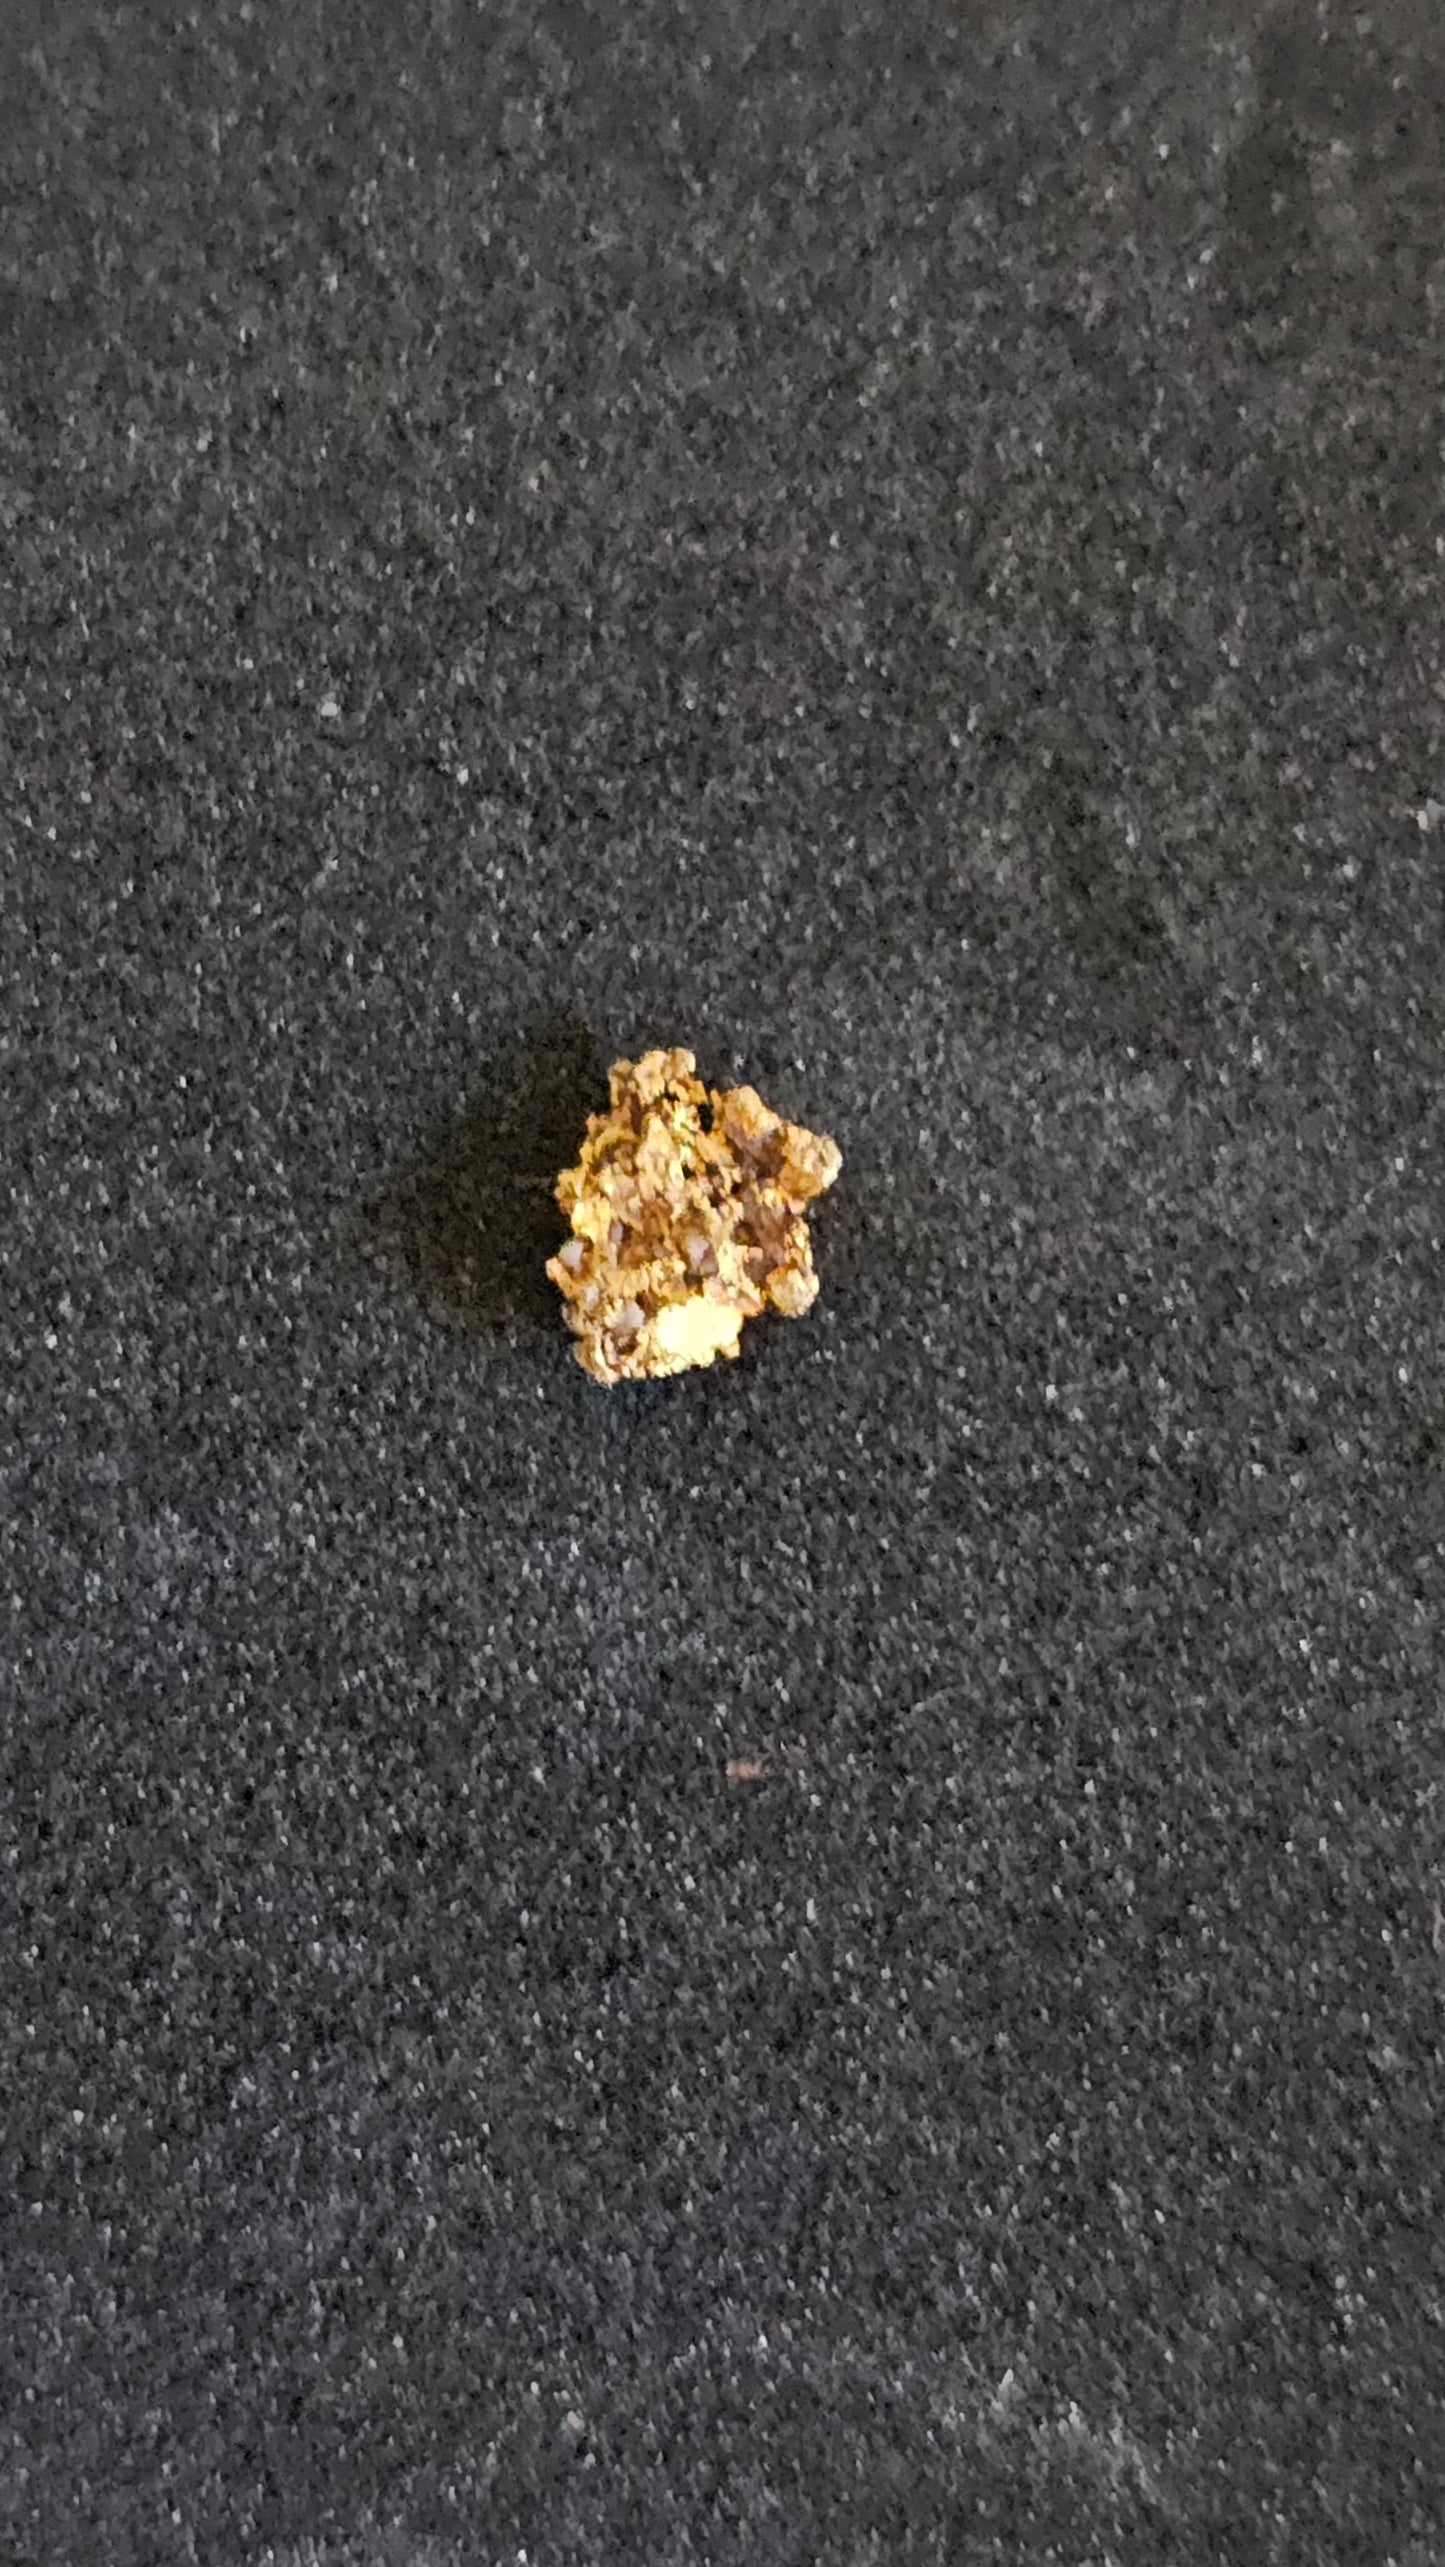 Rushworth Gold Specimen Nugget No.1006